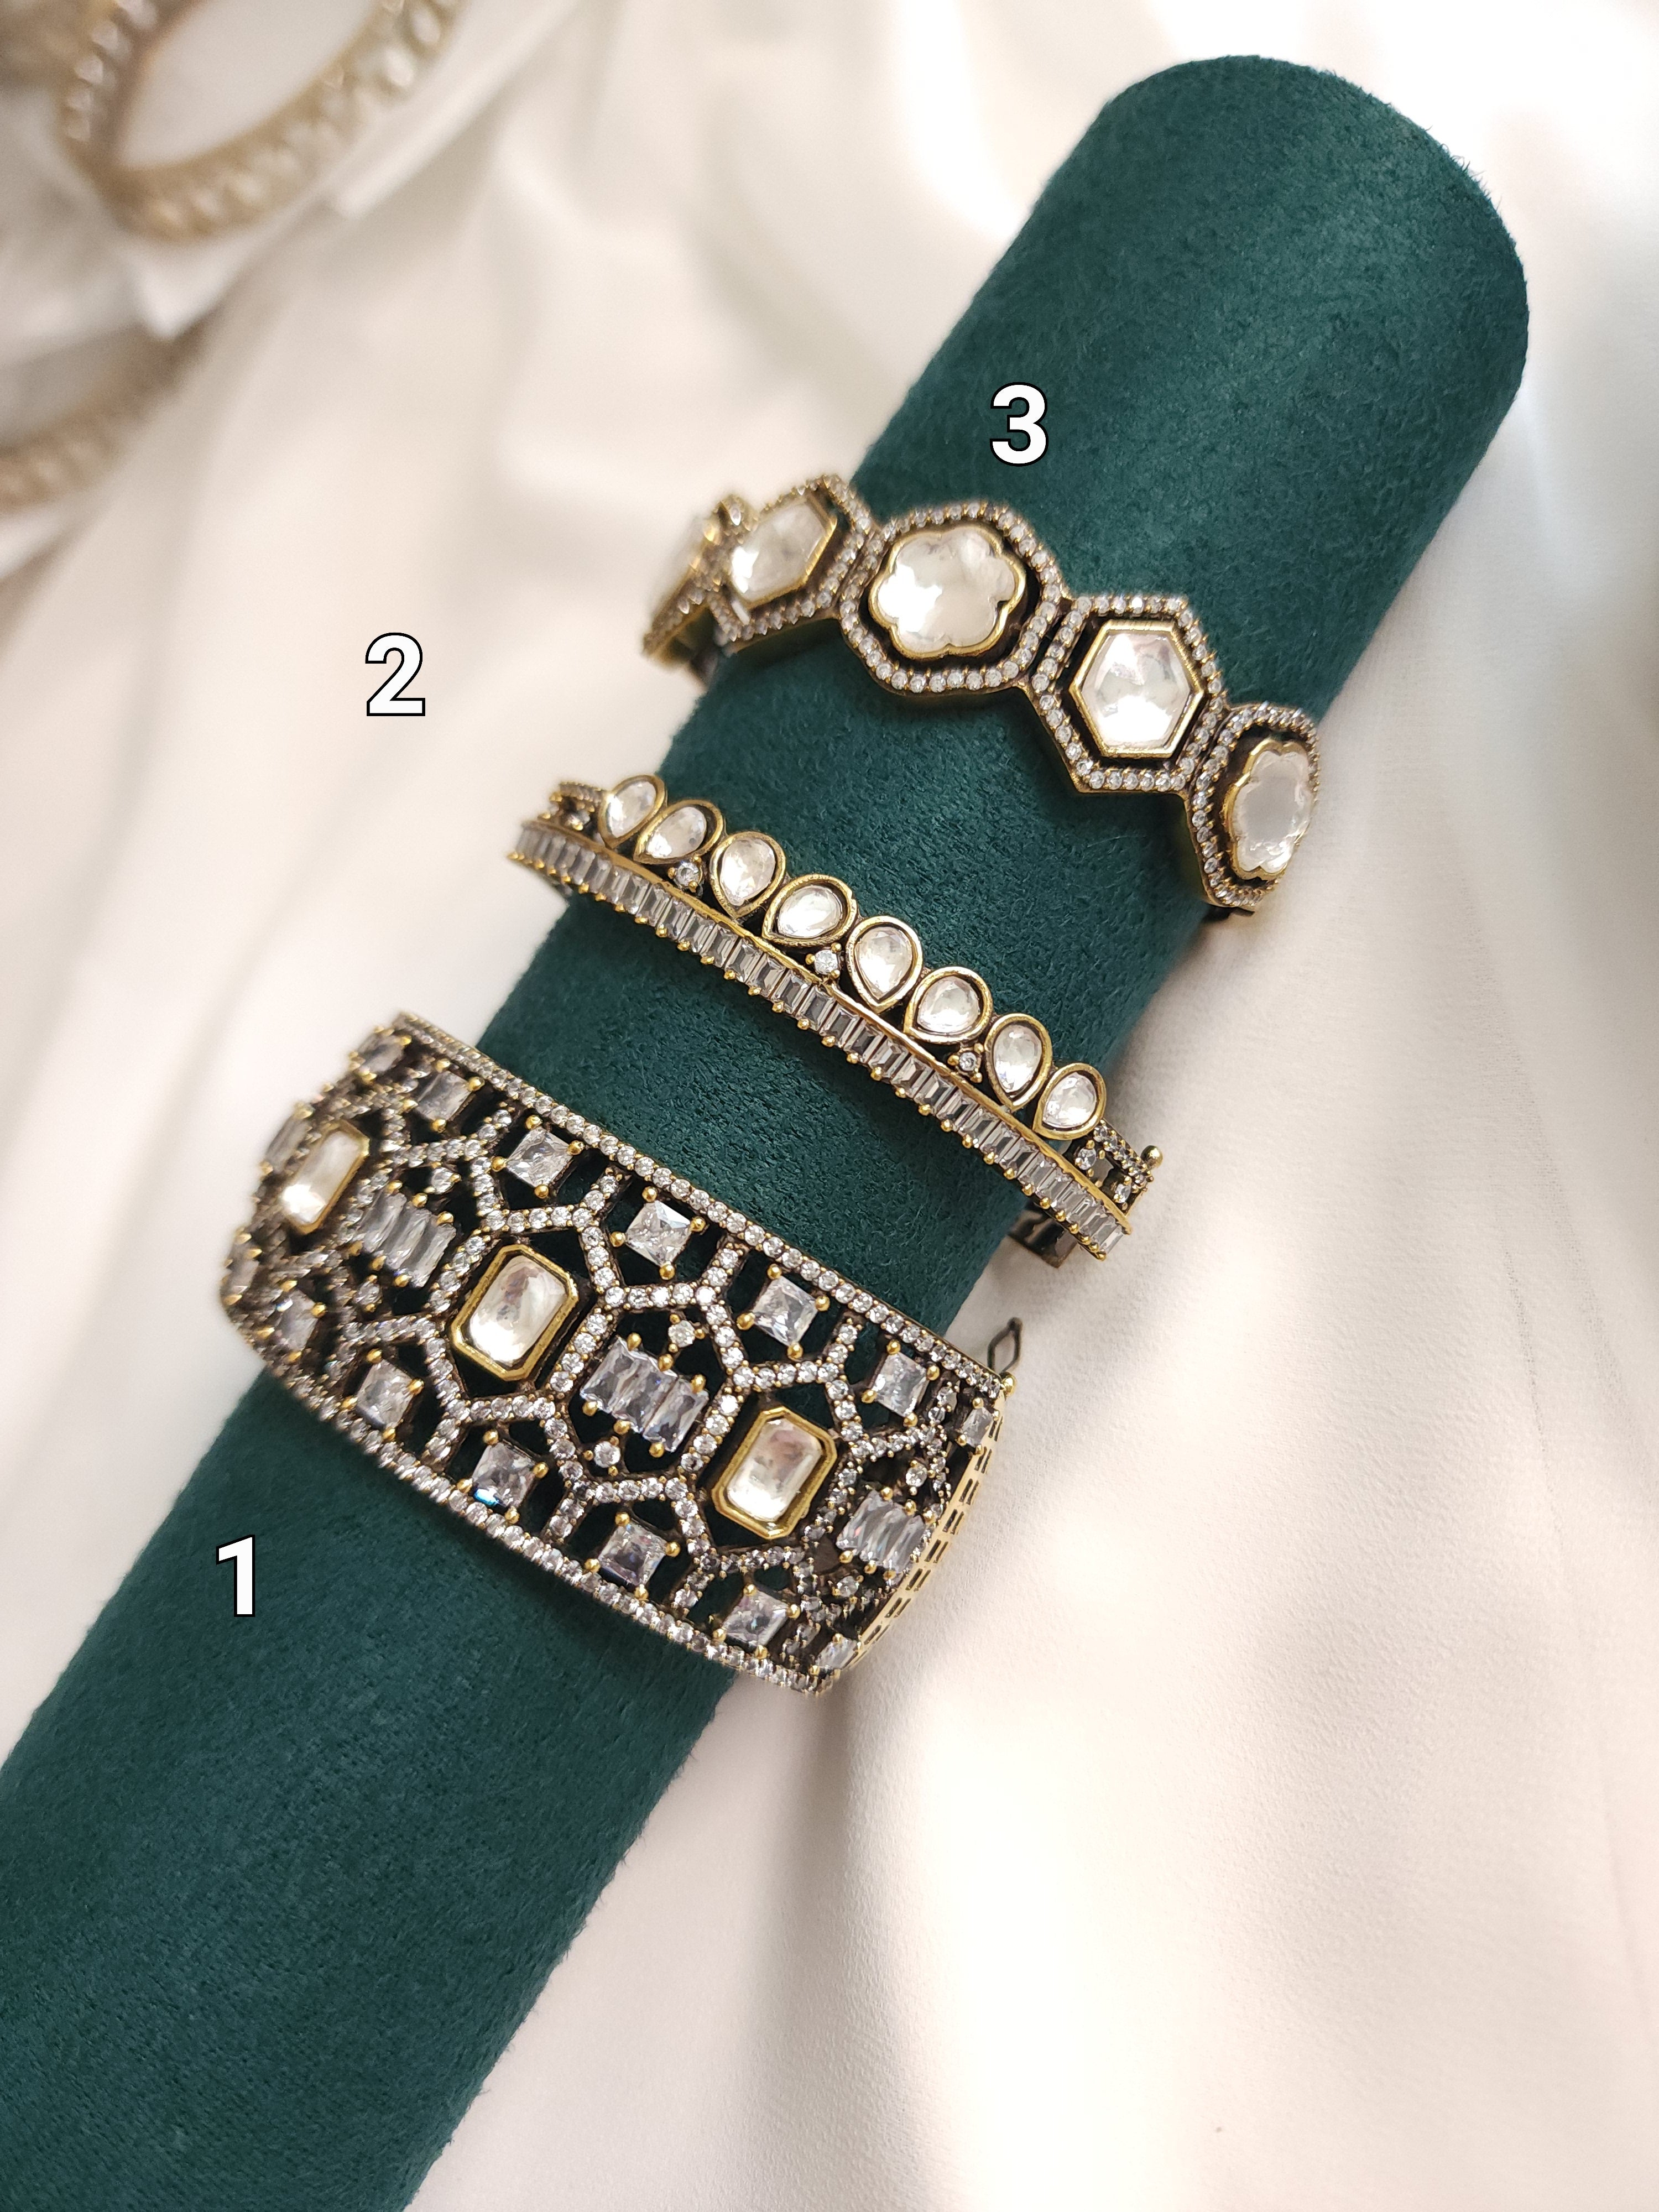 Victorian polki antique bracelets /bangles